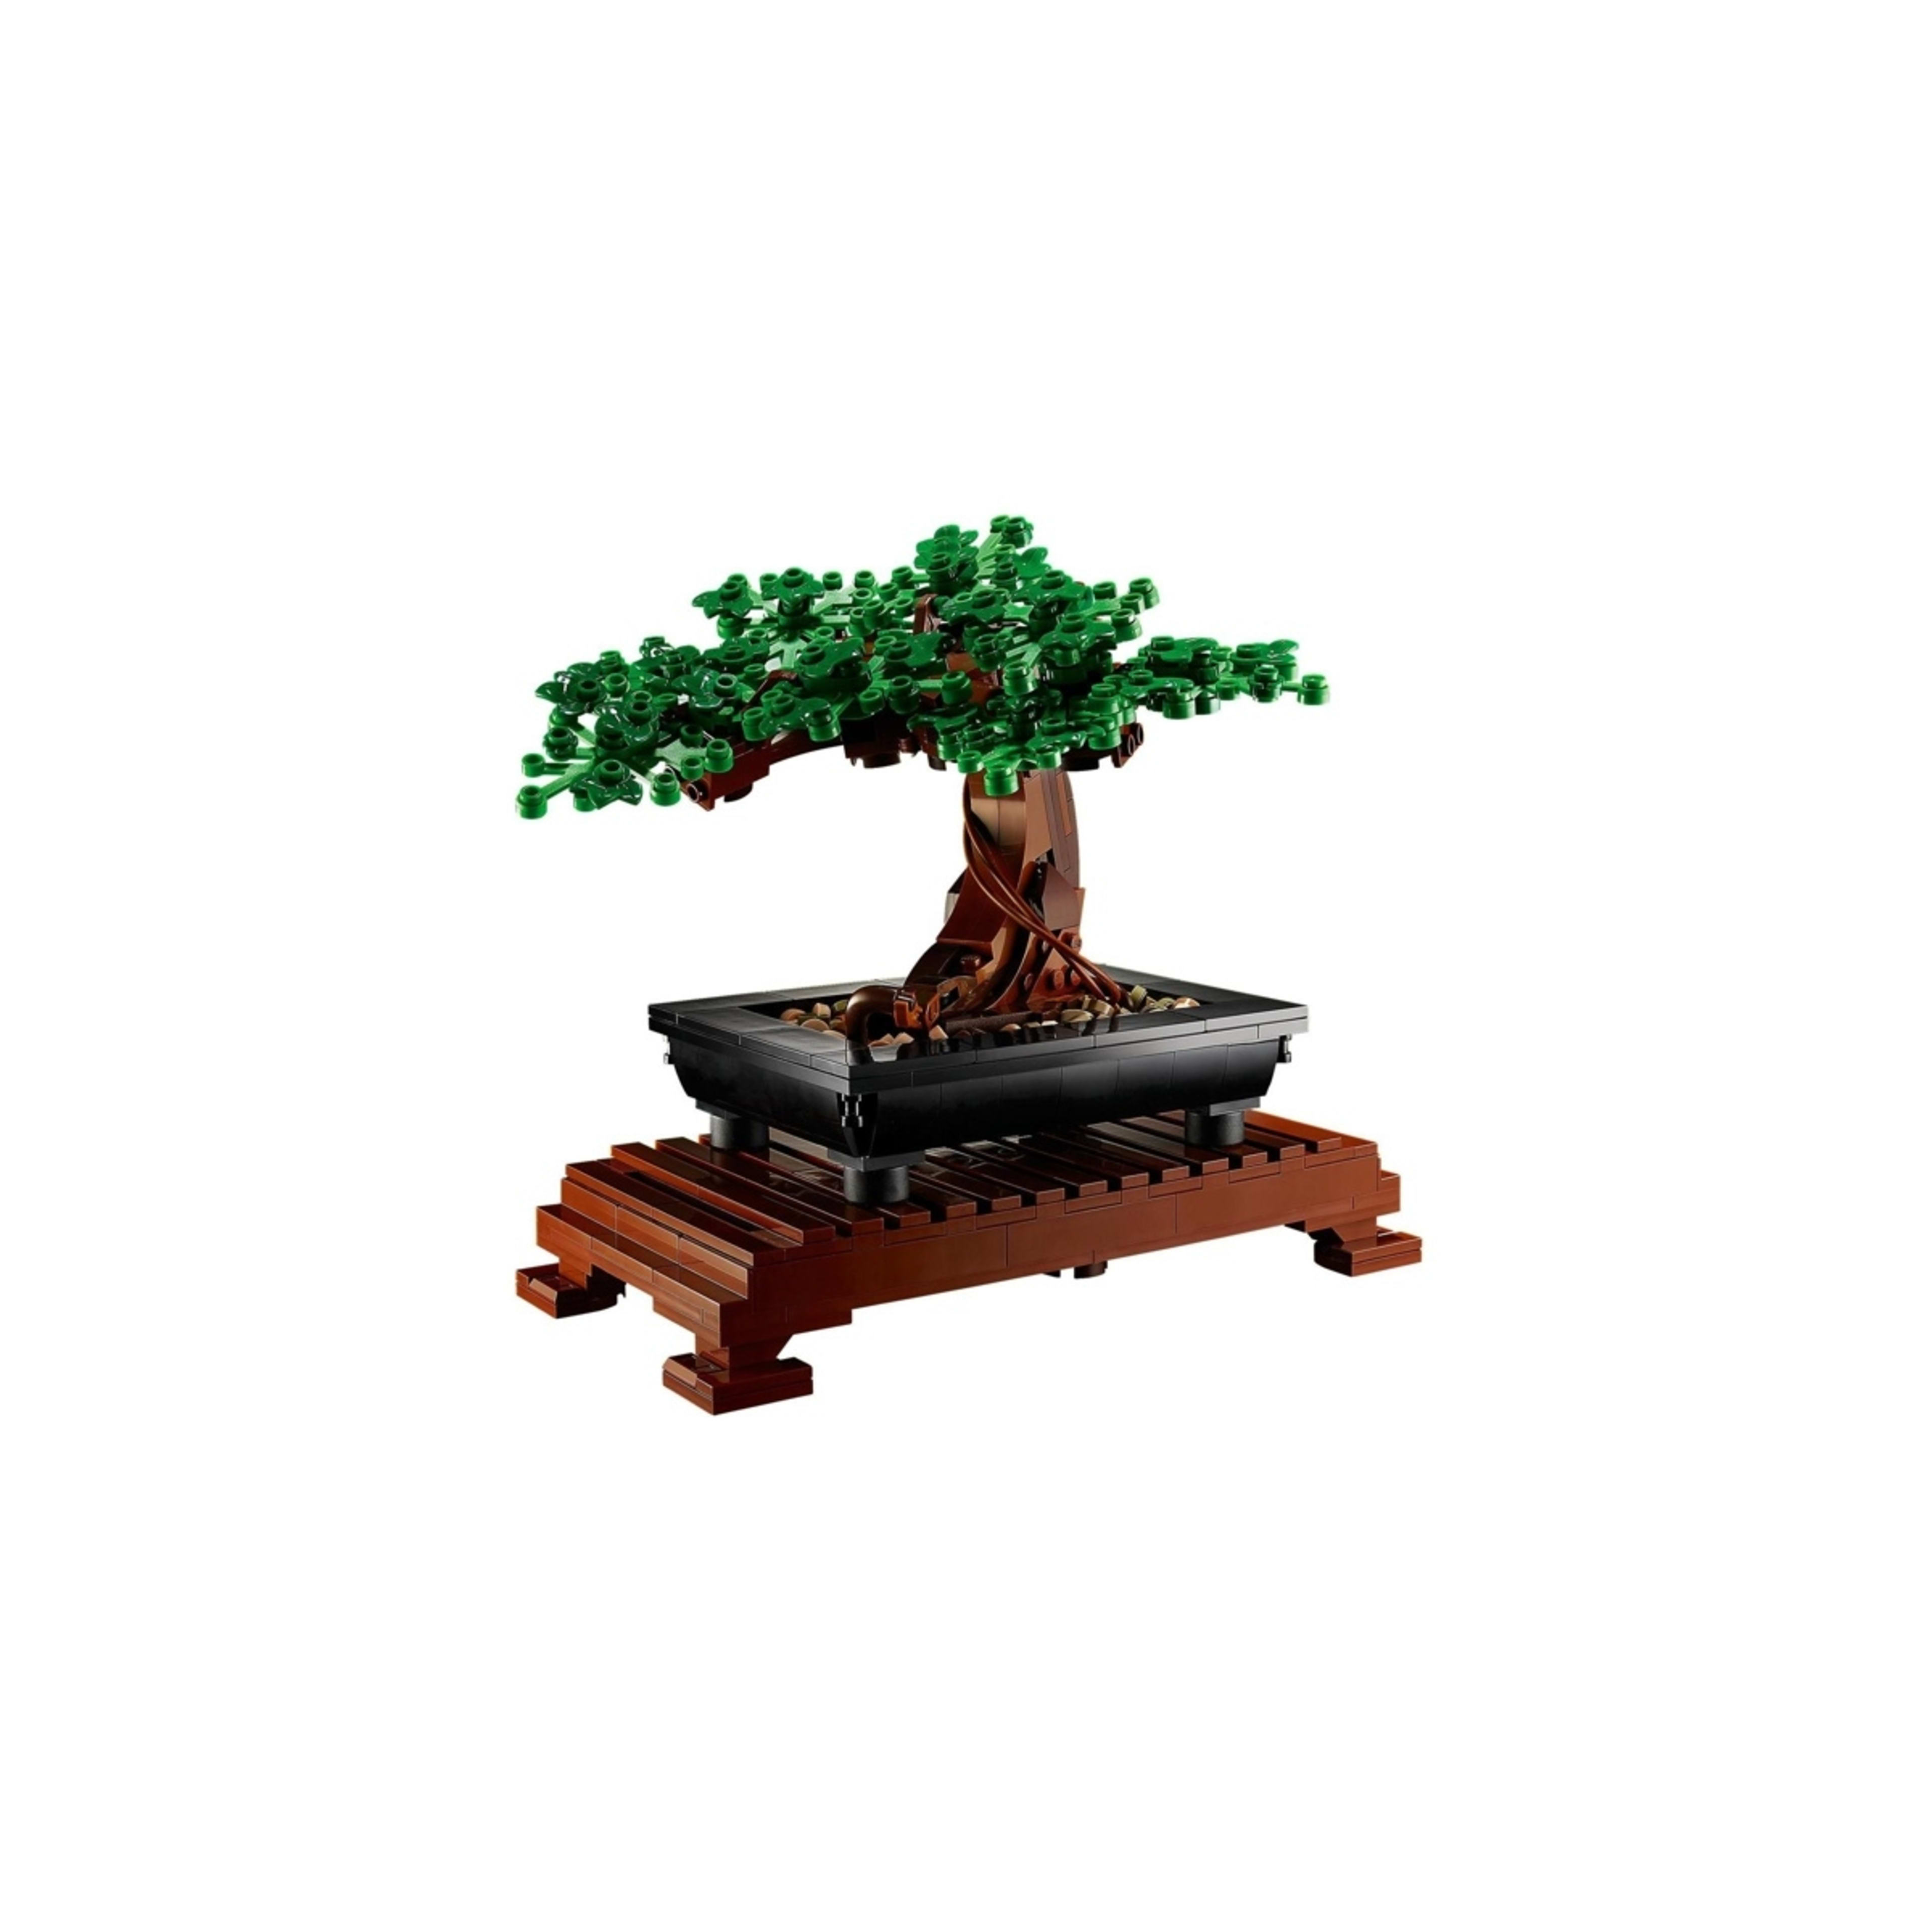 LEGO Creator Expert Bonsai Tree 10281 - Kmart